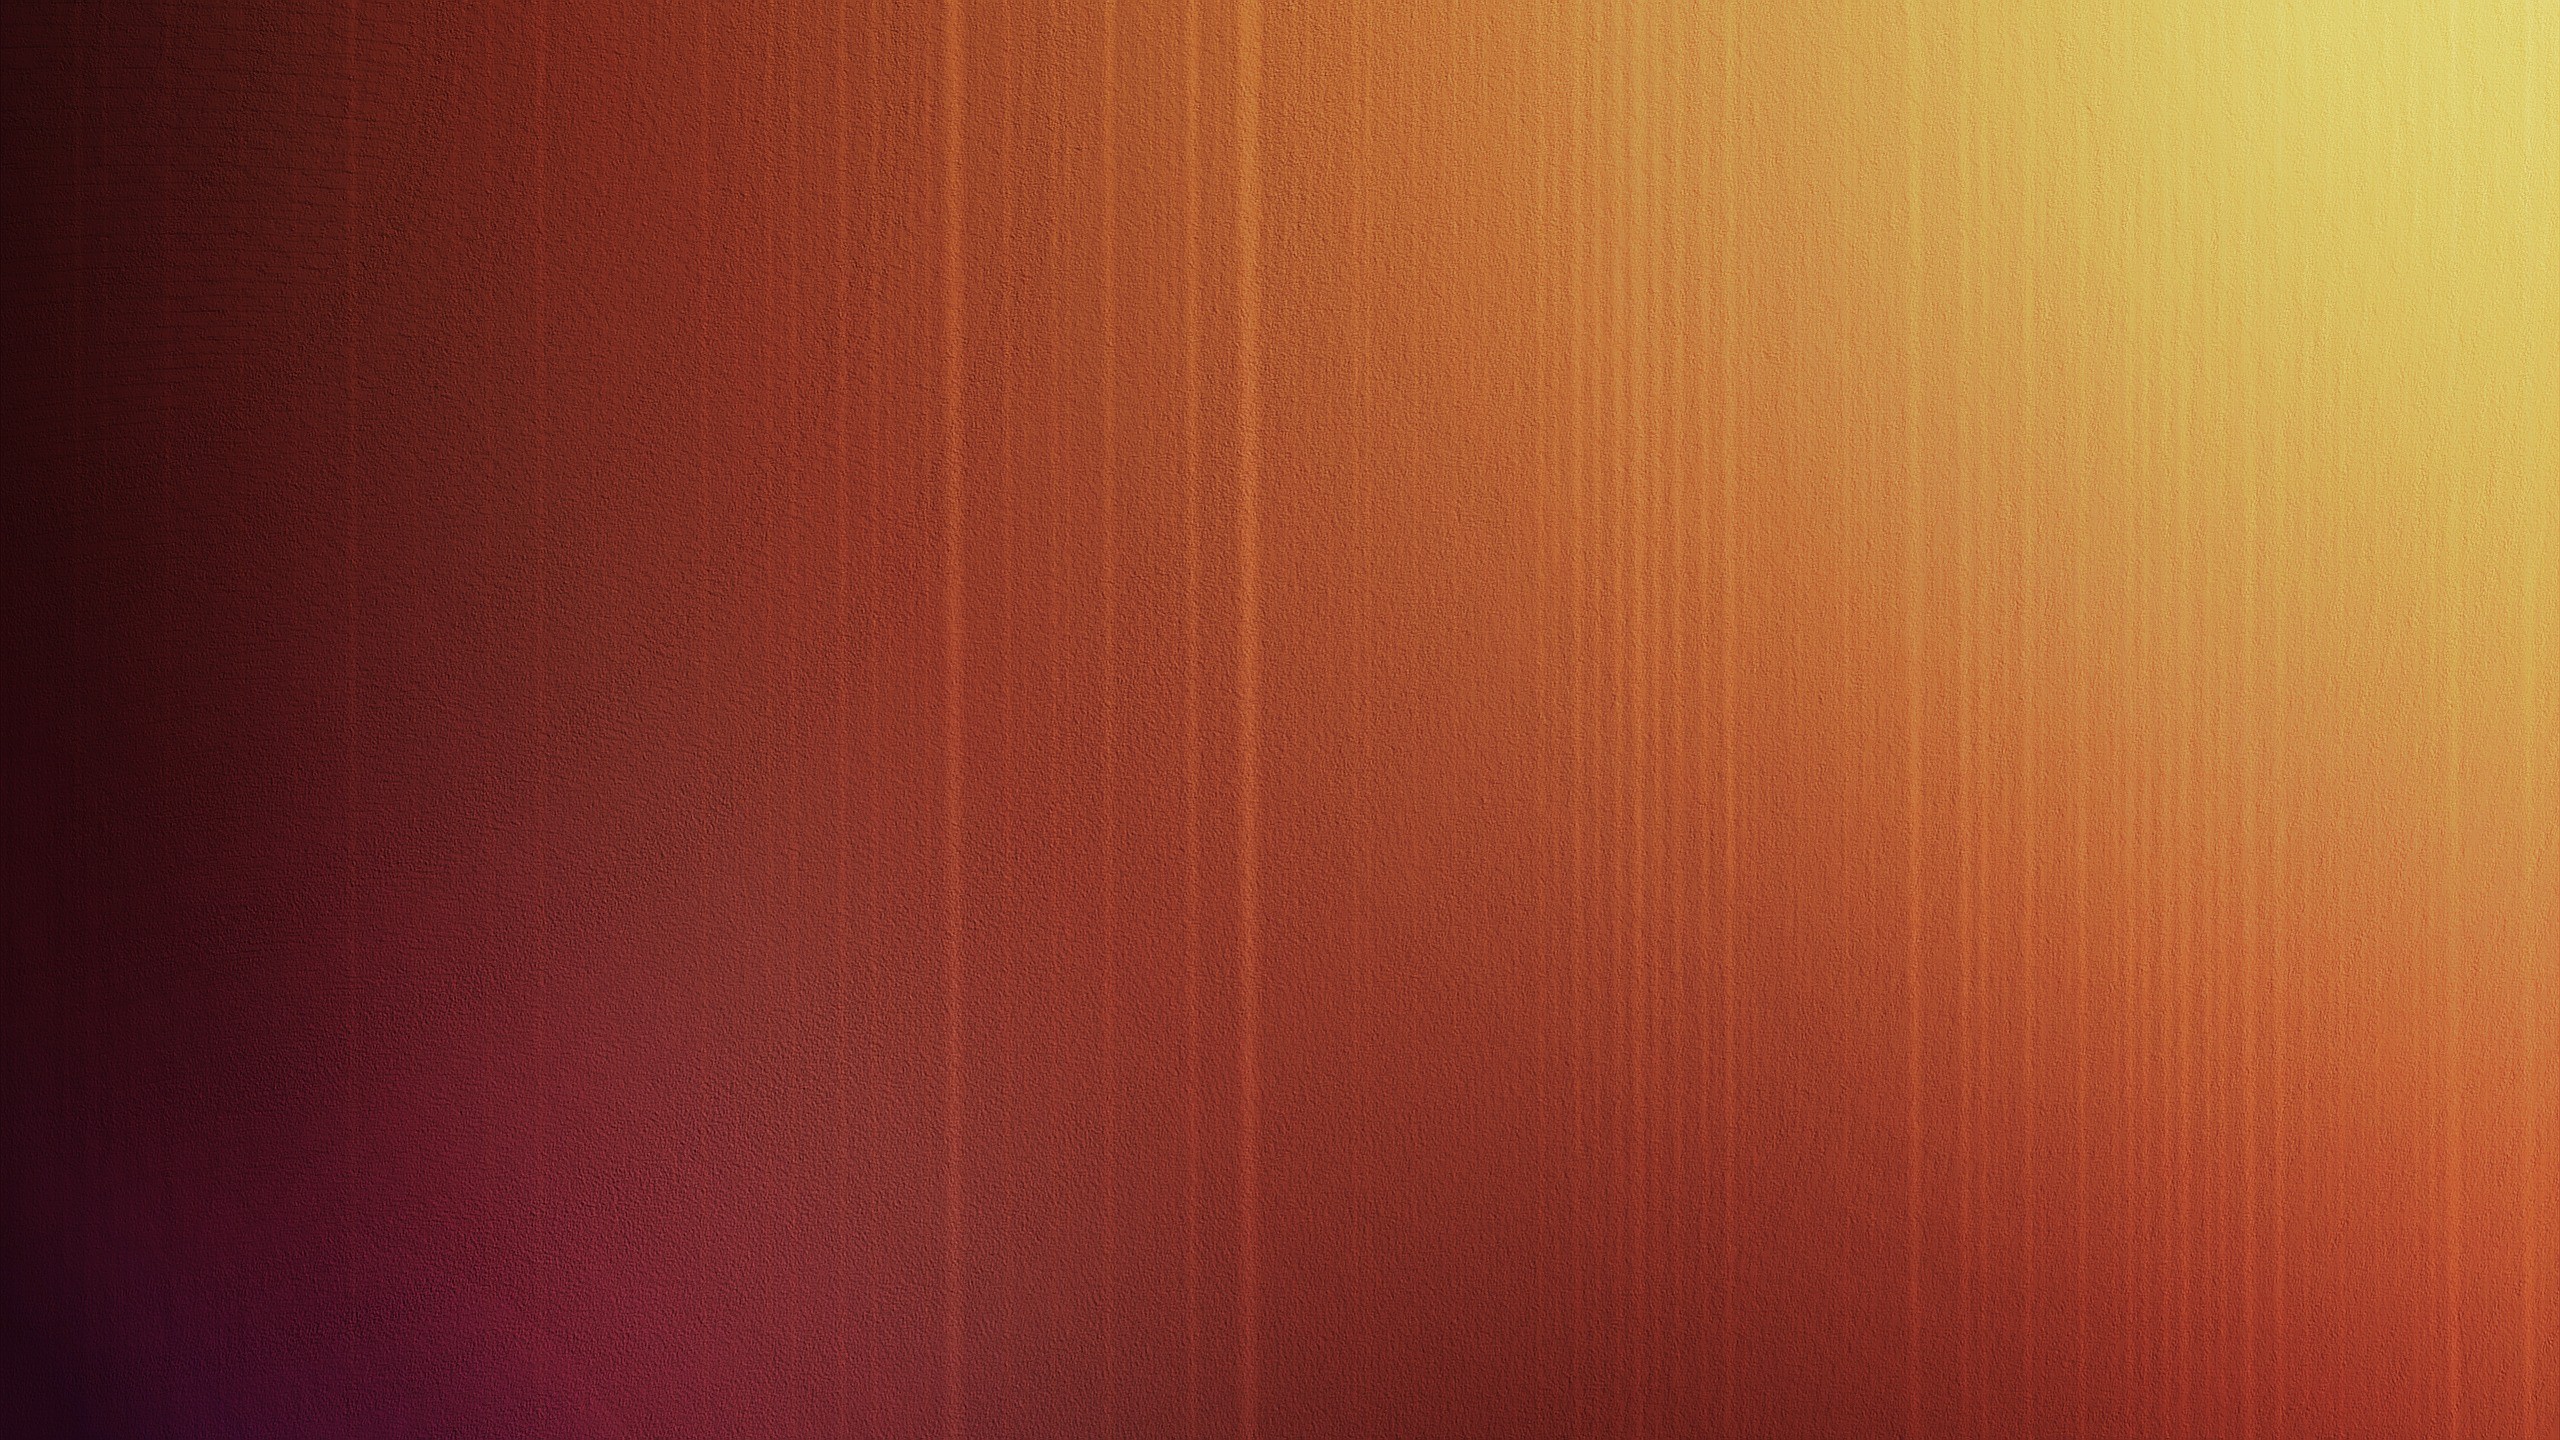 Wallpaper, abstract, red, wall, brown, gradient, orange, texture, circle, lines, color, shape, design, floor, line, hardwood, computer wallpaper, wood flooring, laminate flooring 2560x1440